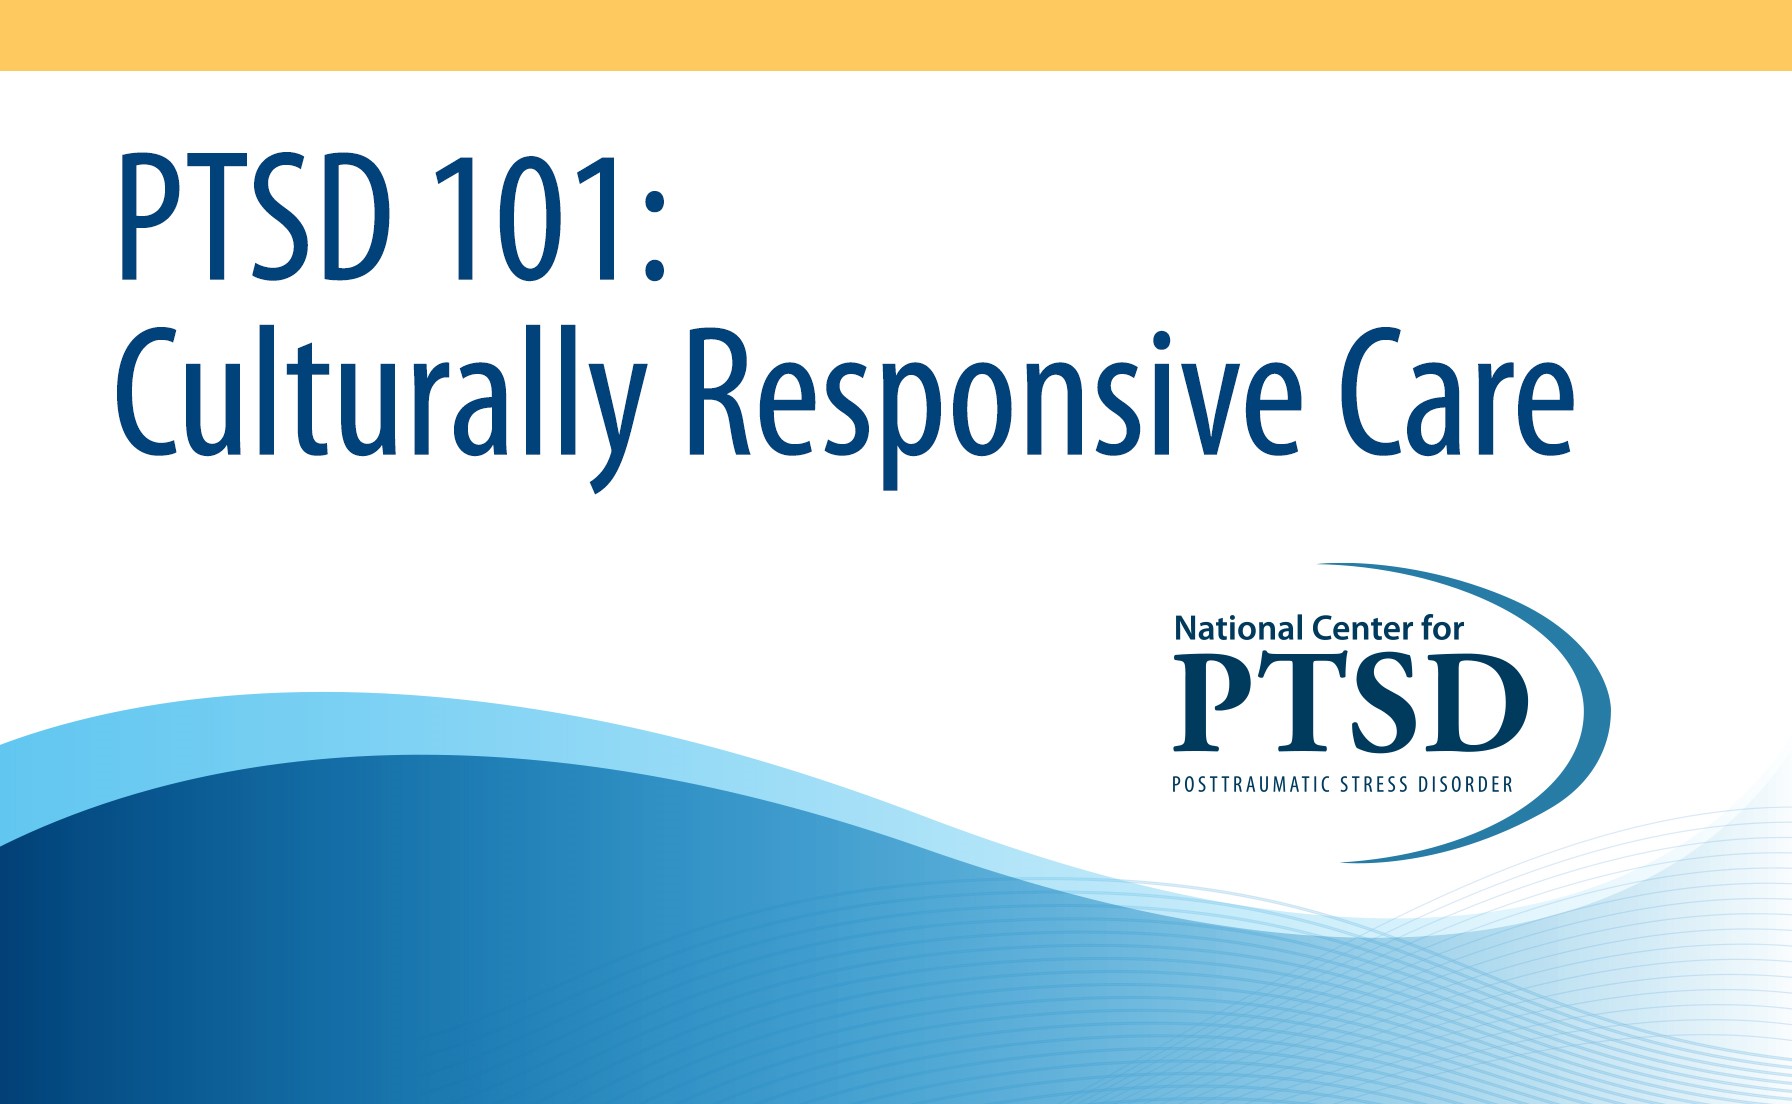 Slide reads PTSD 101: Culturally Responsive Care